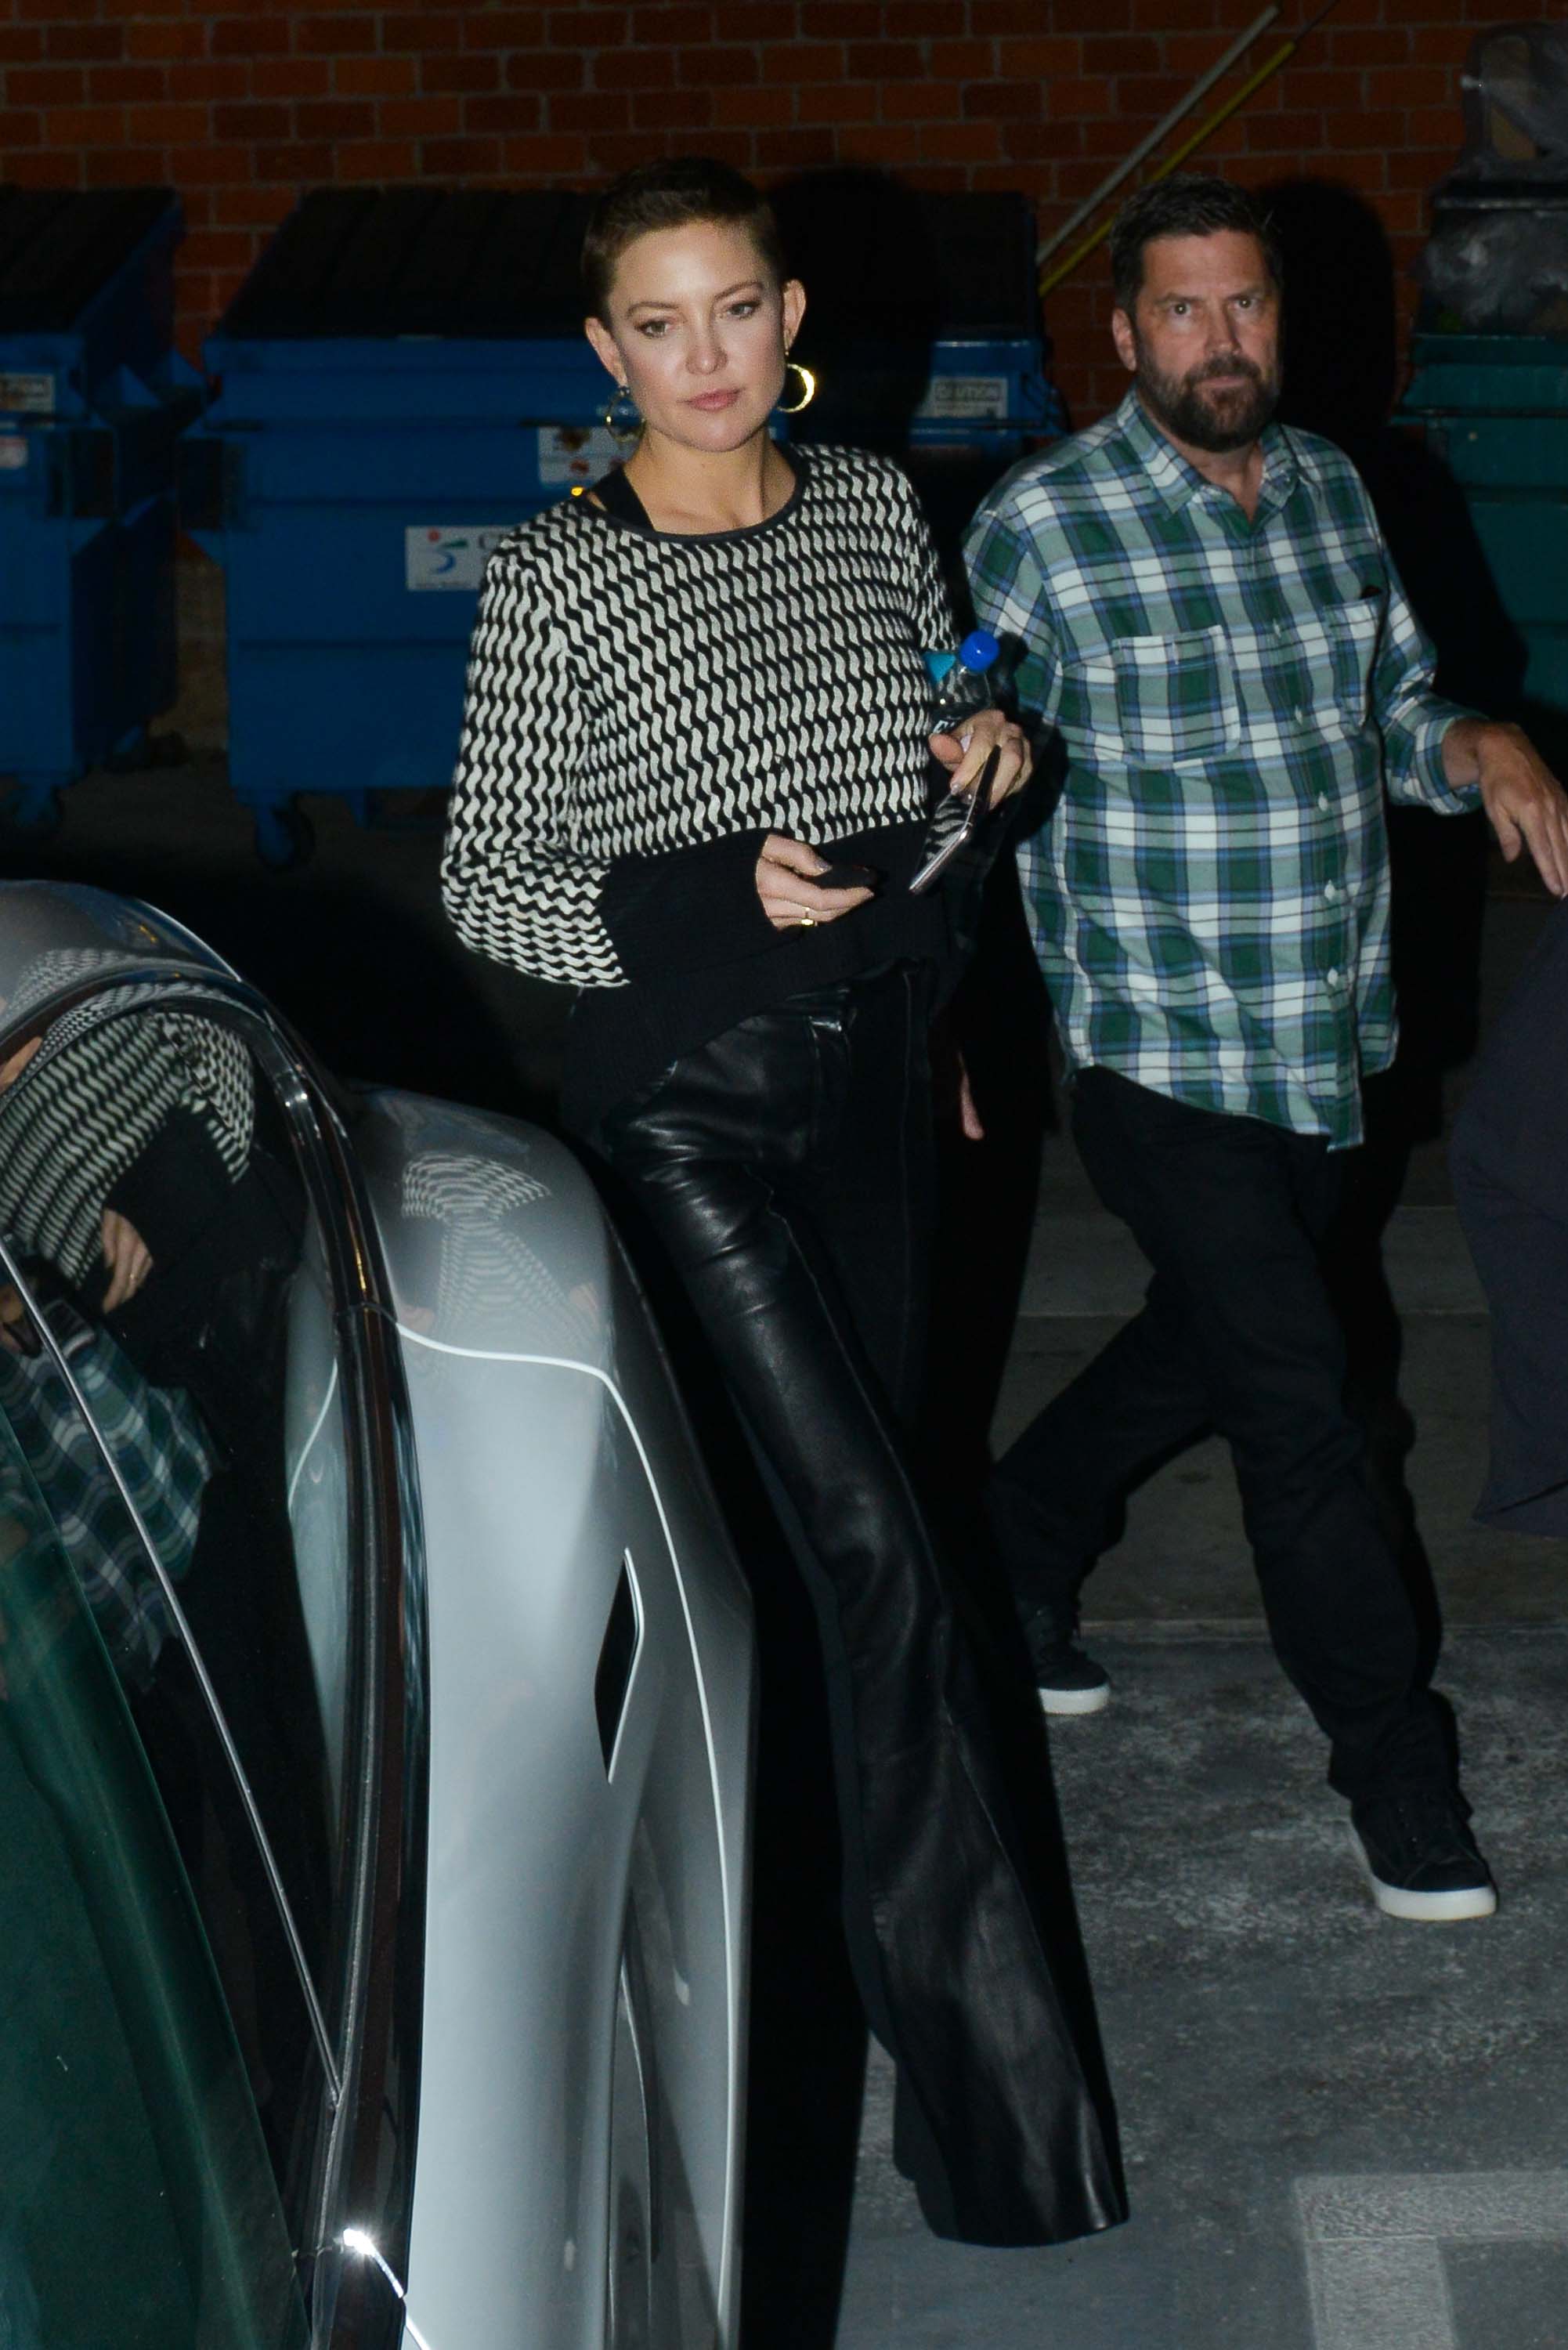 Kate Hudson attends Aero Theater in Santa Monica